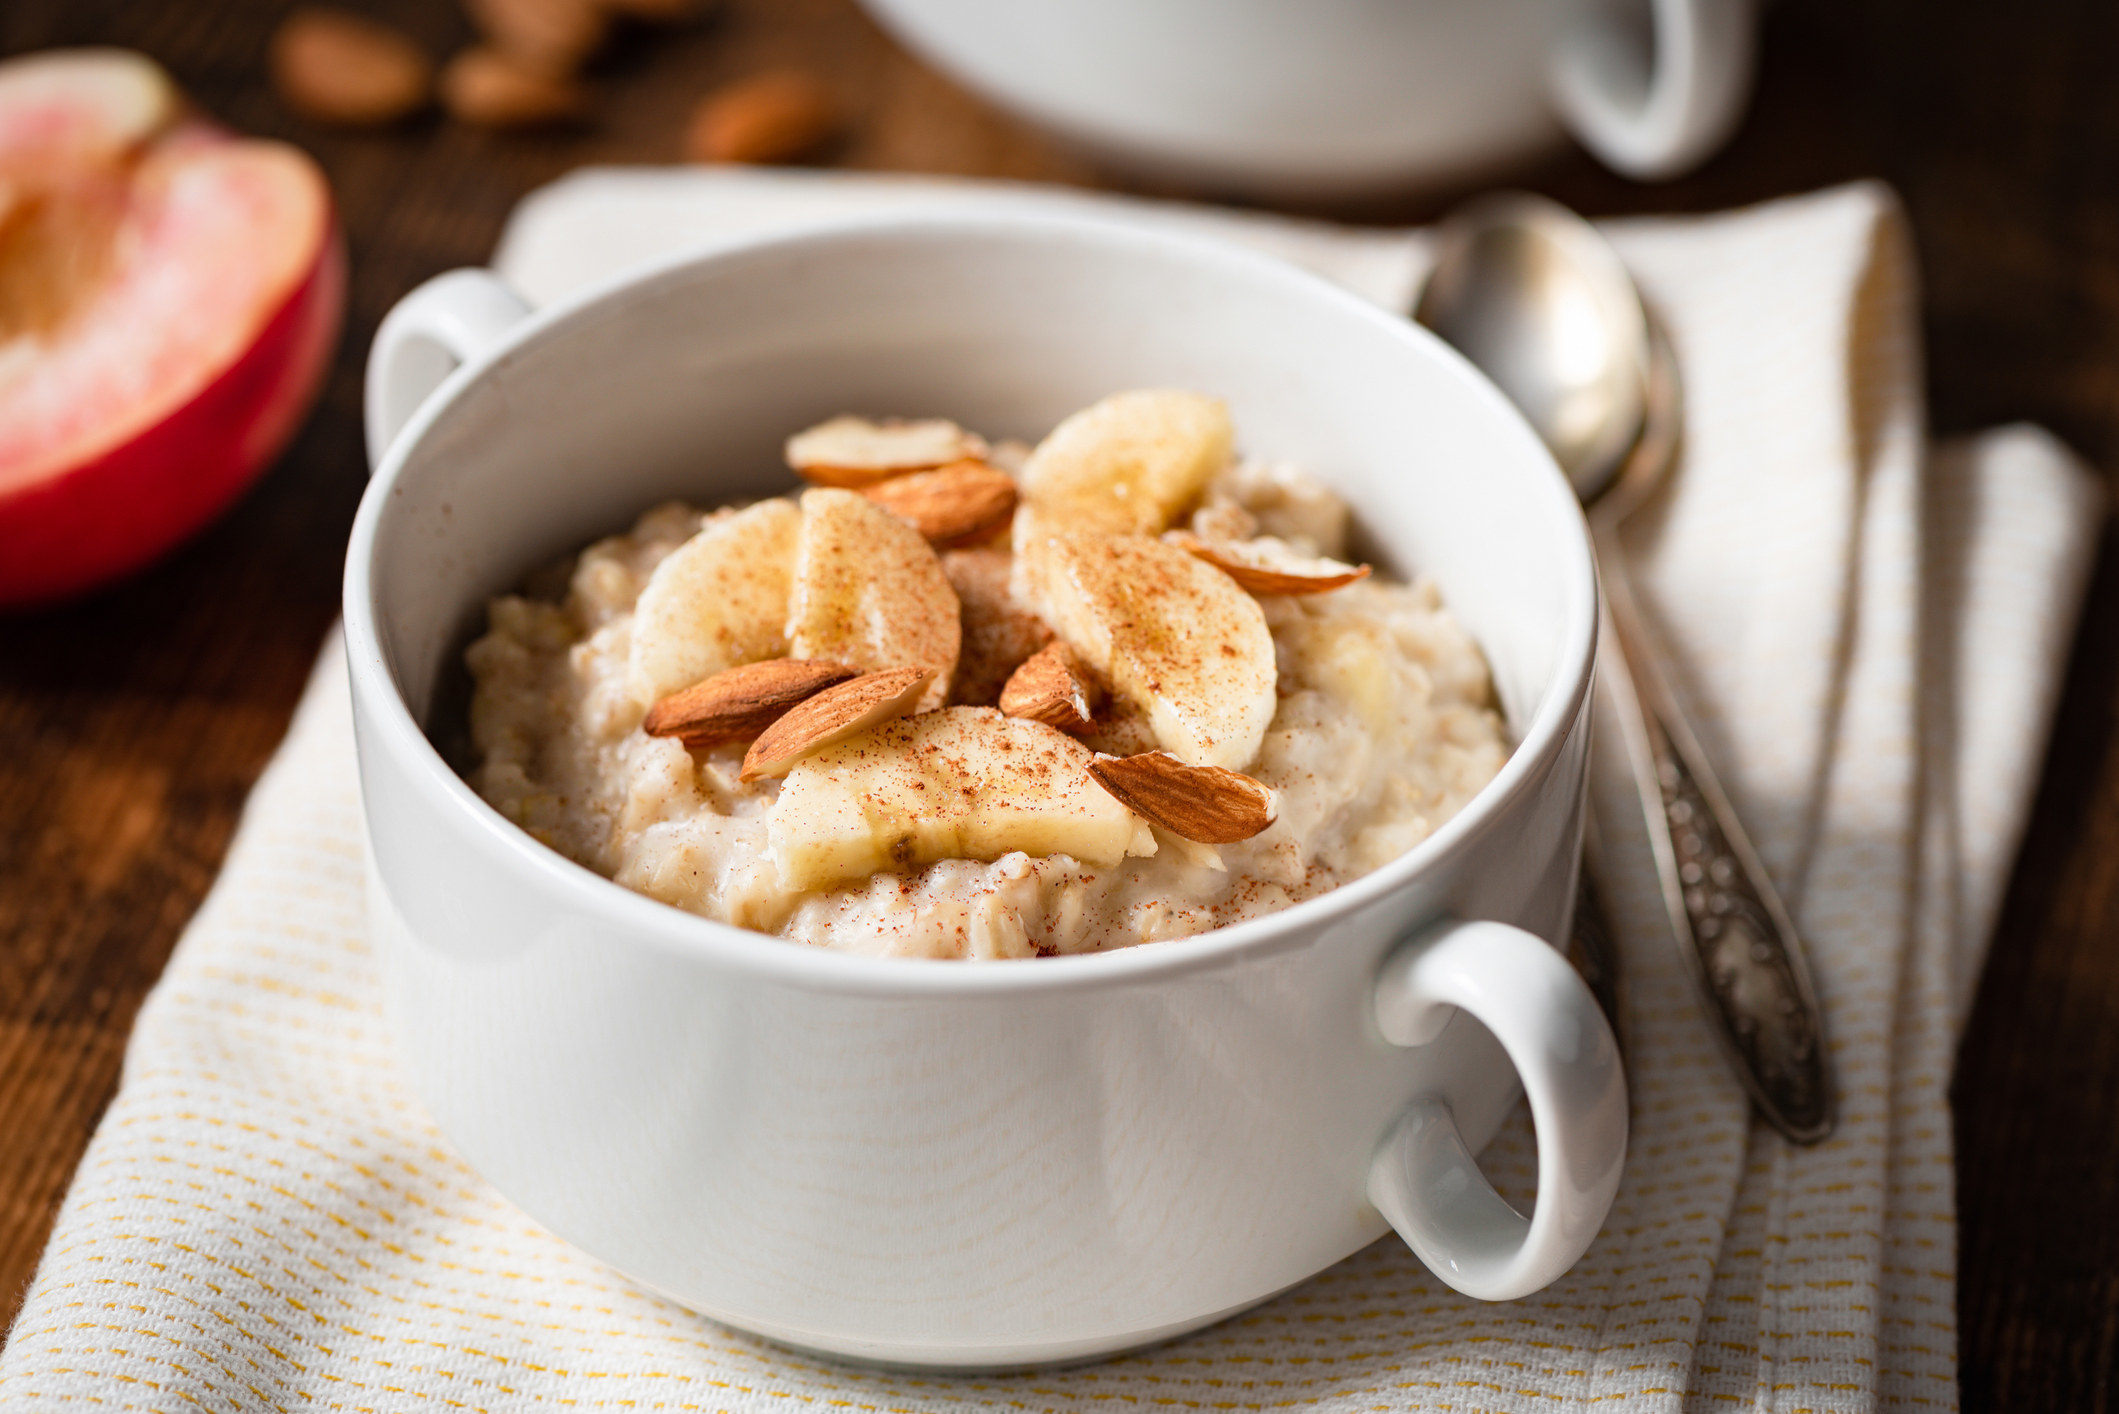 Oatmeal porridge with banana, cinnamon, and almonds in a white bowl. Healthy breakfast food.